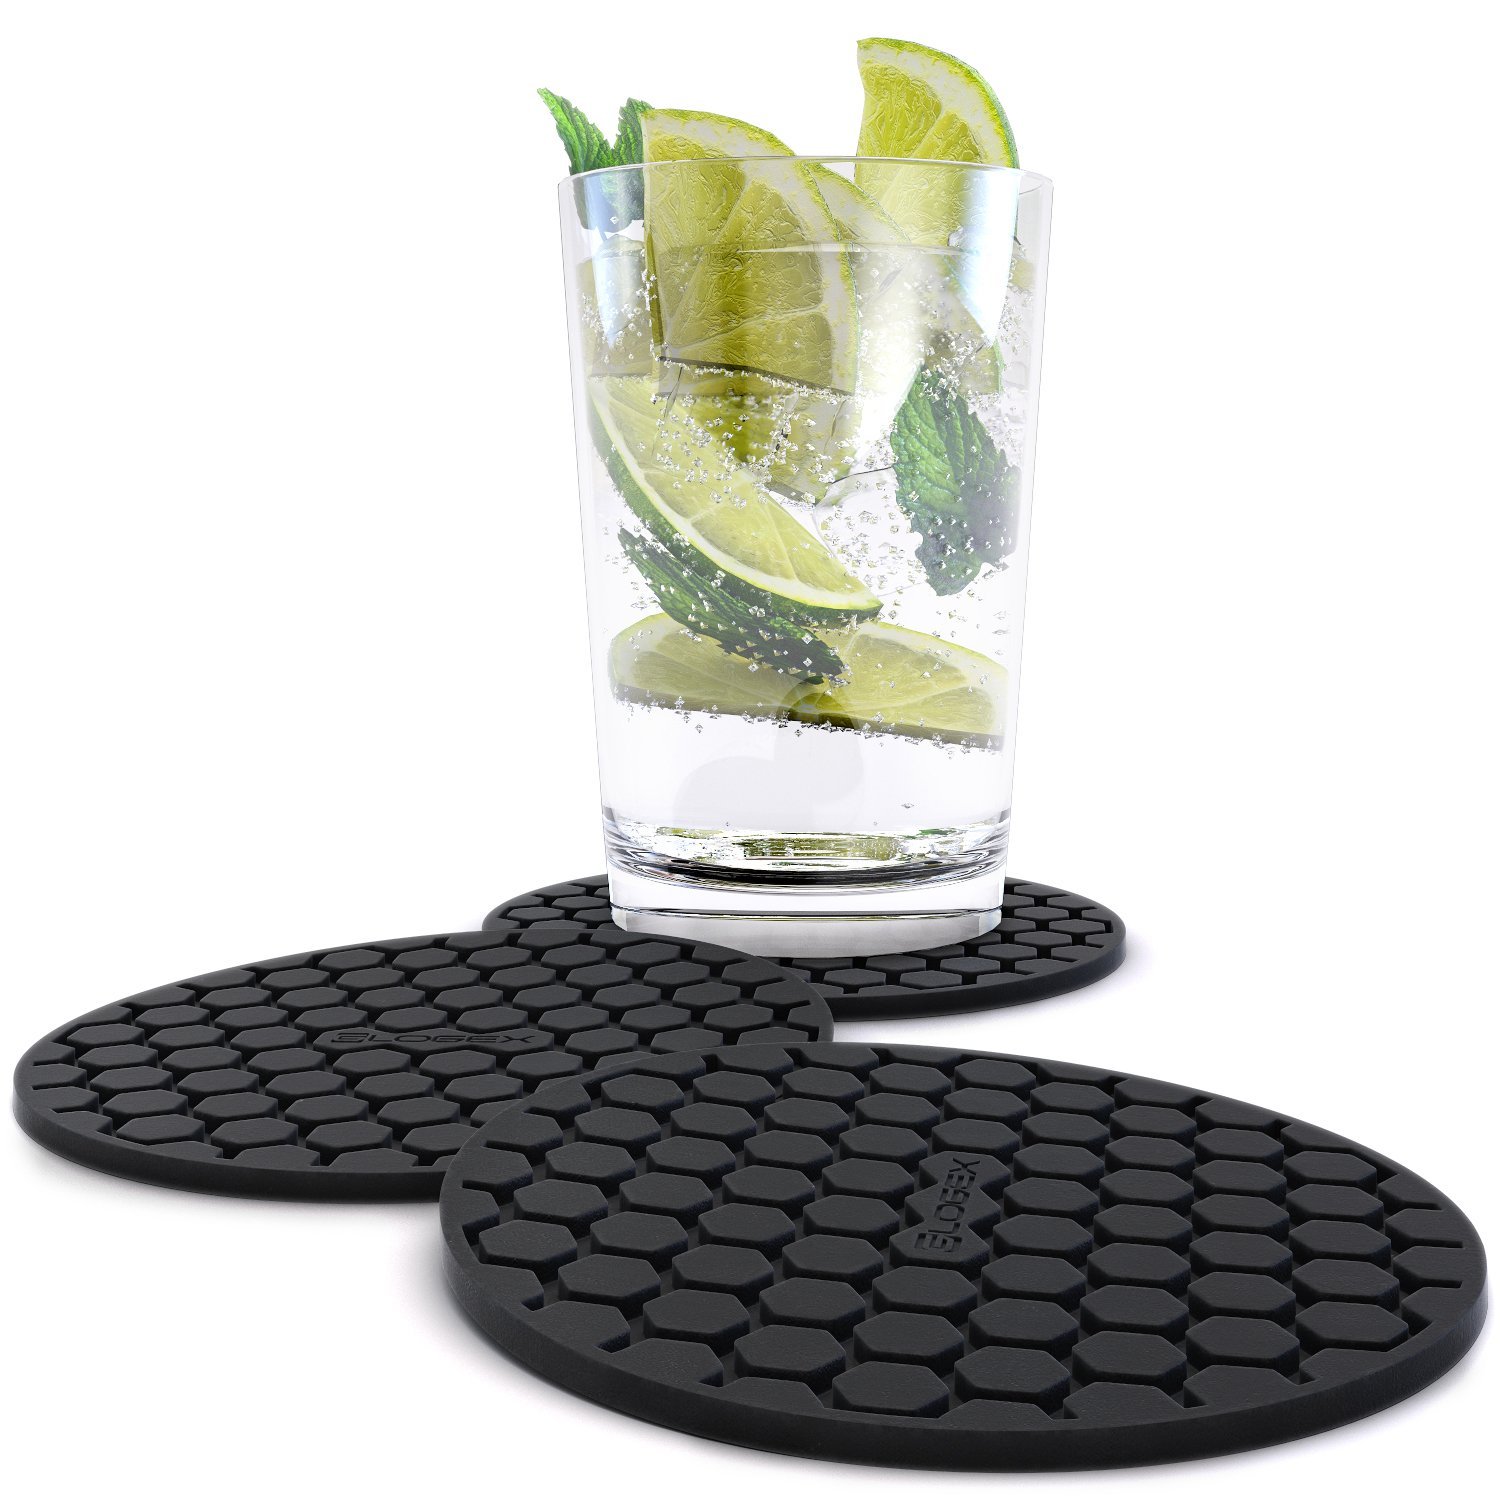 Amazing Quality Drink Coaster Set (8pc), Sleek Modern Design. Prevents Furniture Damage, Absorbs Spills and Condensation! Top Grade Silicone Ð